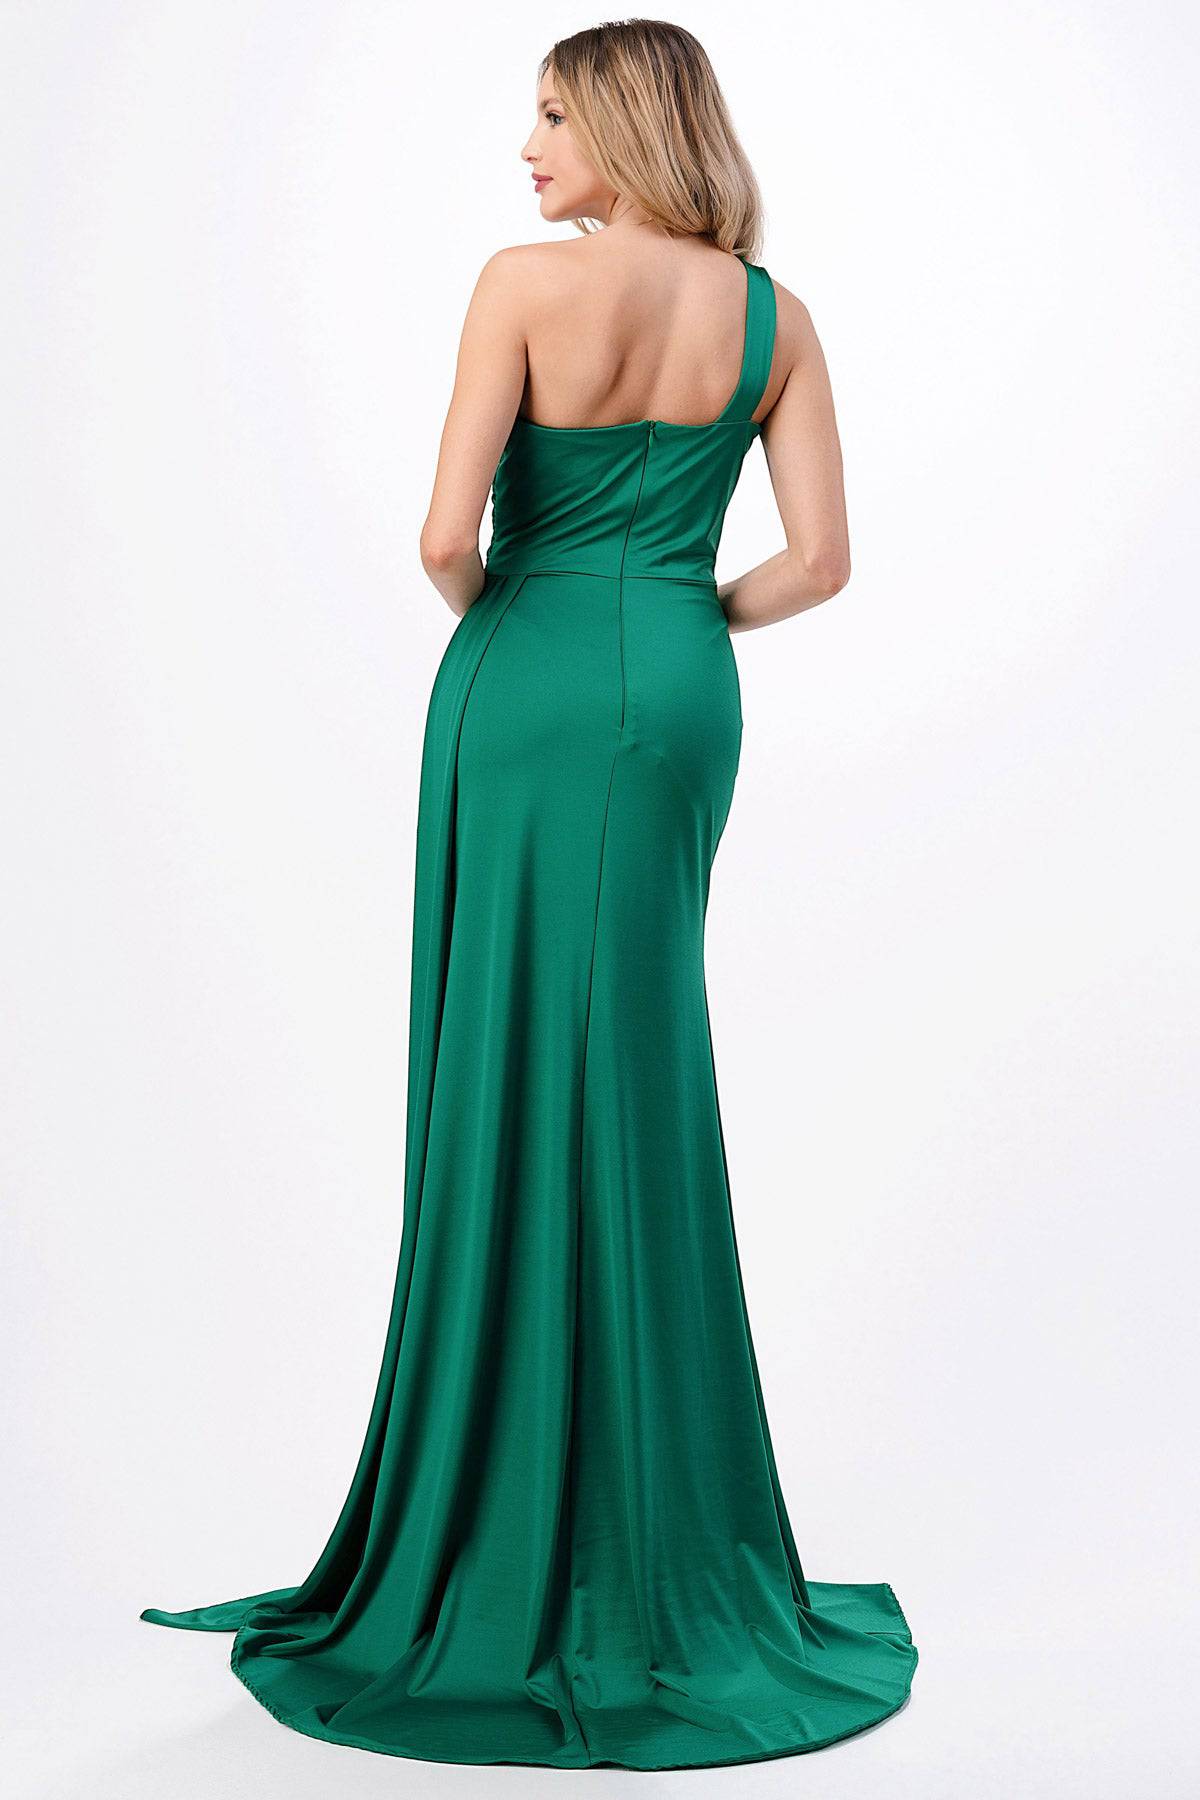 Aspeed Design D567 Emerald Green Slit Leg One Shoulder Dress | 2 Colors - NORMA REED